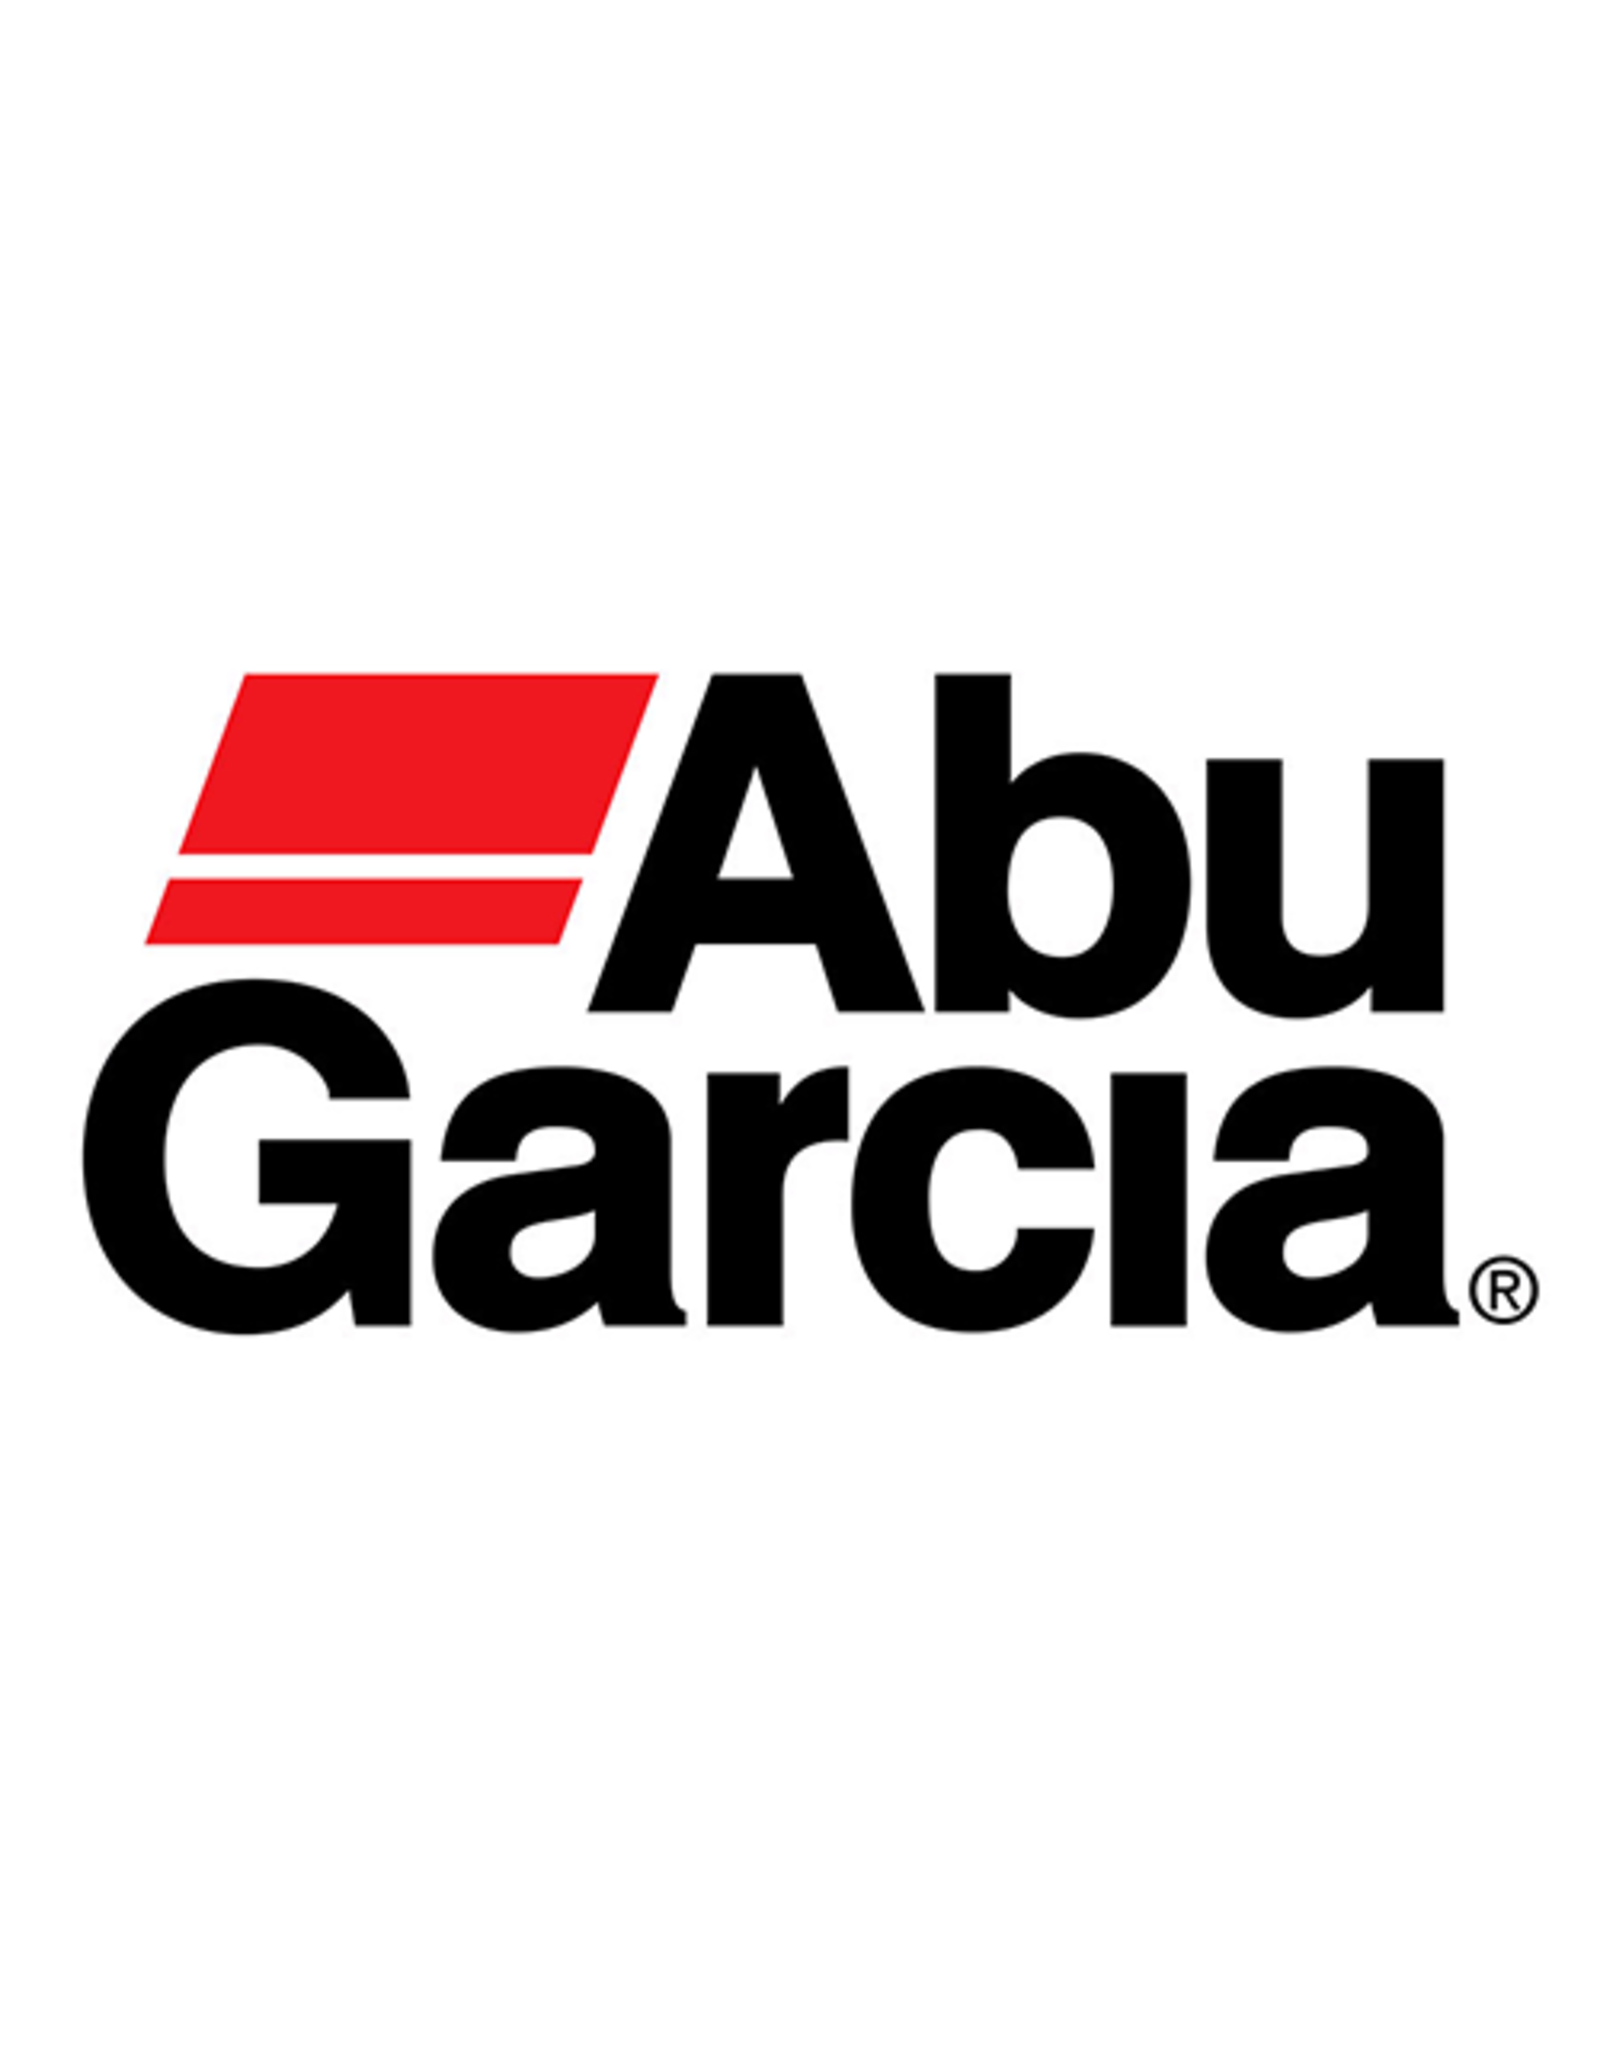 Abu Garcia 5236  FRAME ASSEMBLY